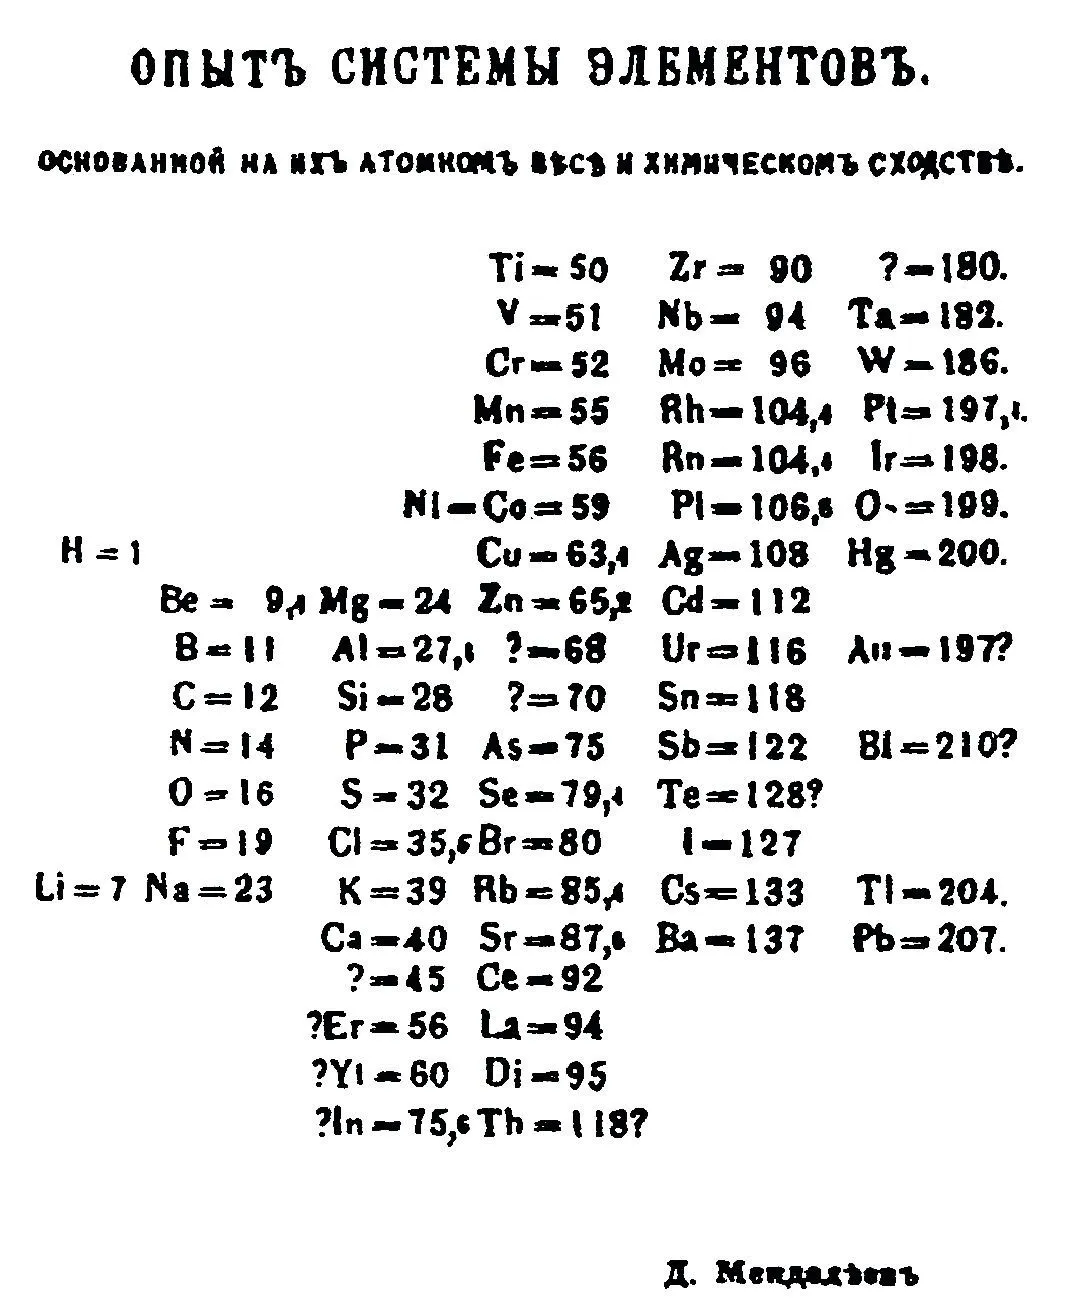 Classification de Dmitri Mendeleïev (1869)